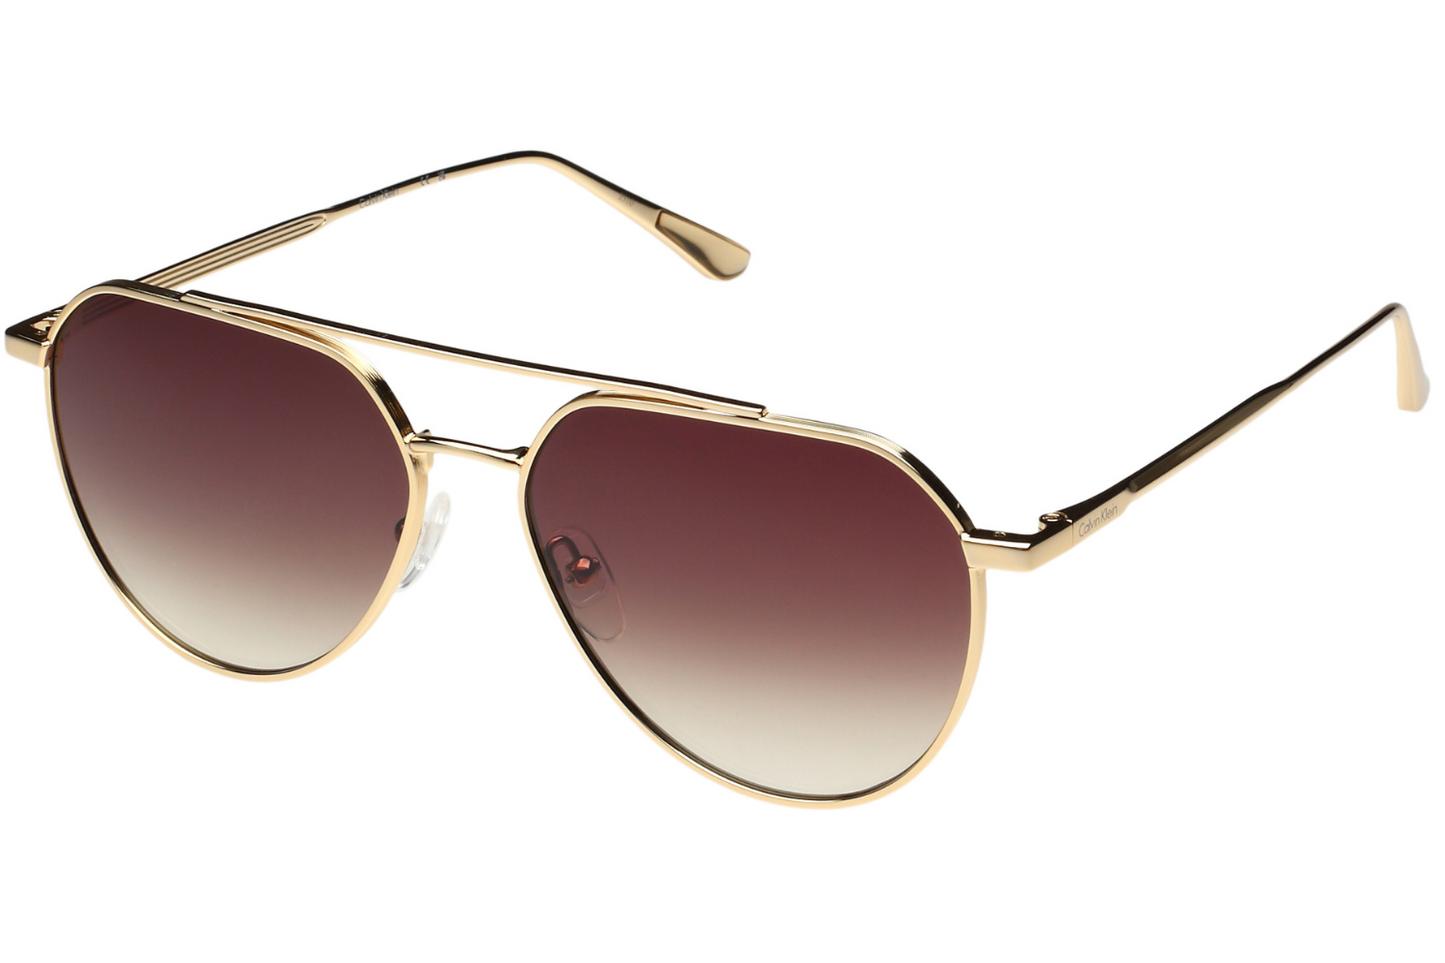 Calvin Klein Sunglasses CK24100